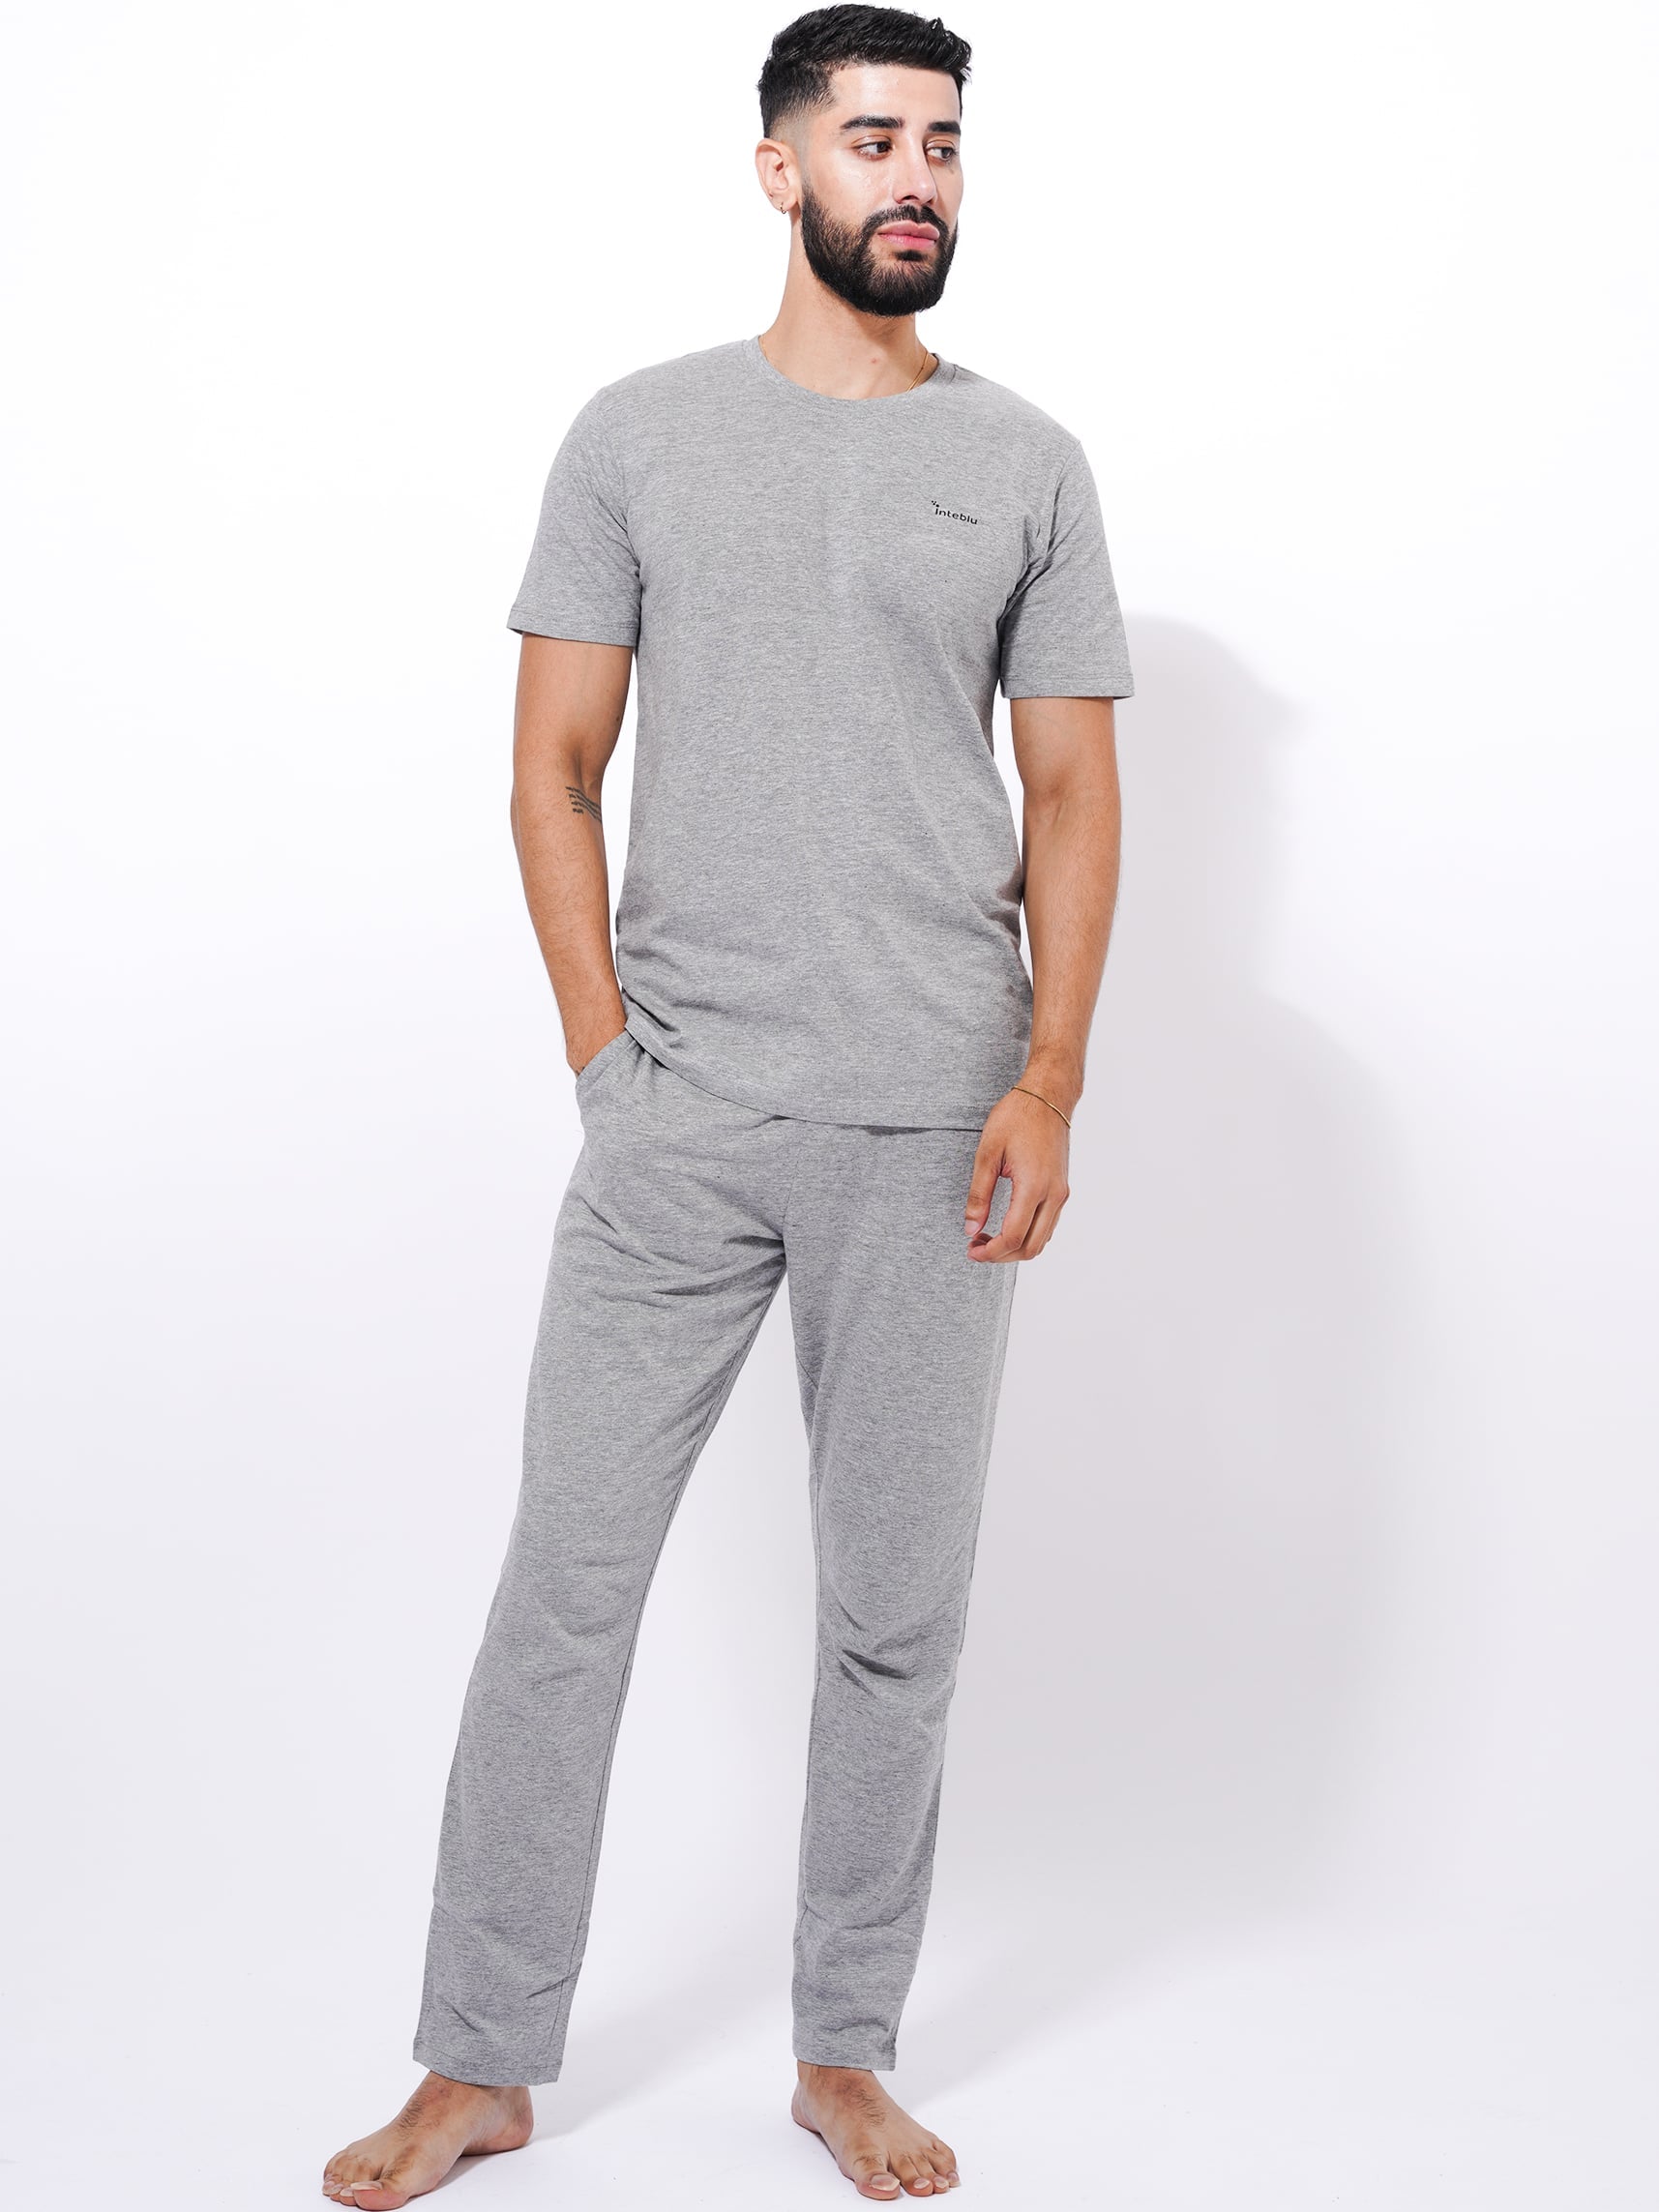 Men's Summer T-Shirt & Full Pants Set in Gray Mélange - inteblu